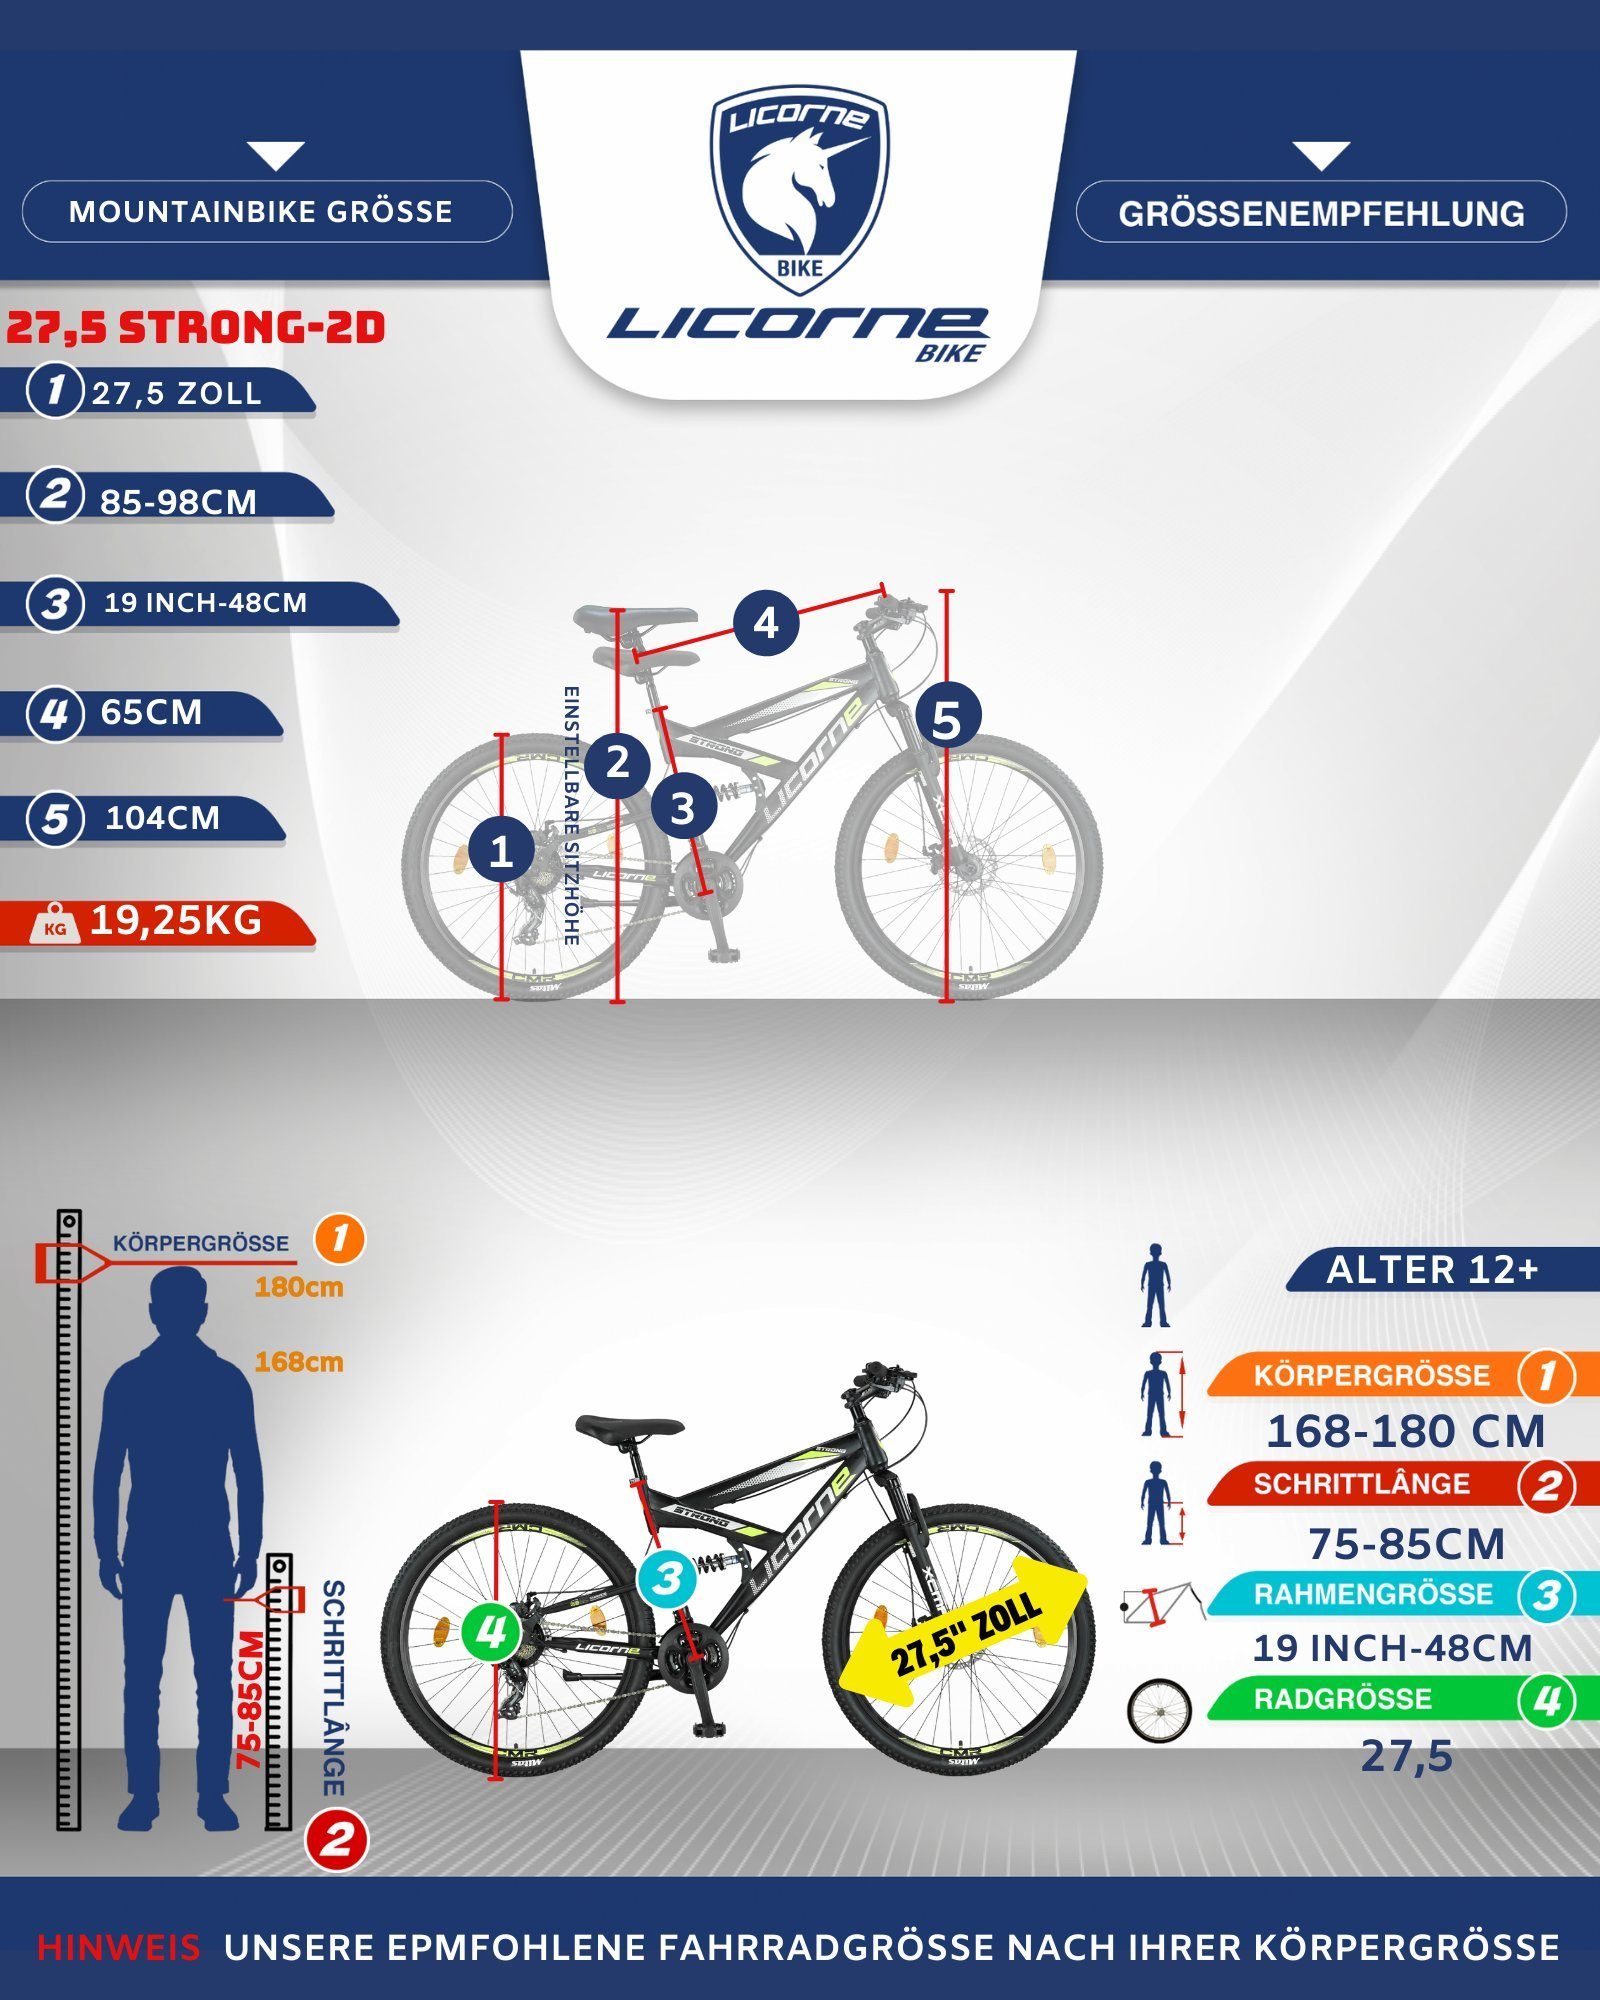 Mountainbike Premium 29 Bike Licorne Bike Schwarz/Lime Mountainbike Licorne und Zoll 26, in 27,5 2D Strong